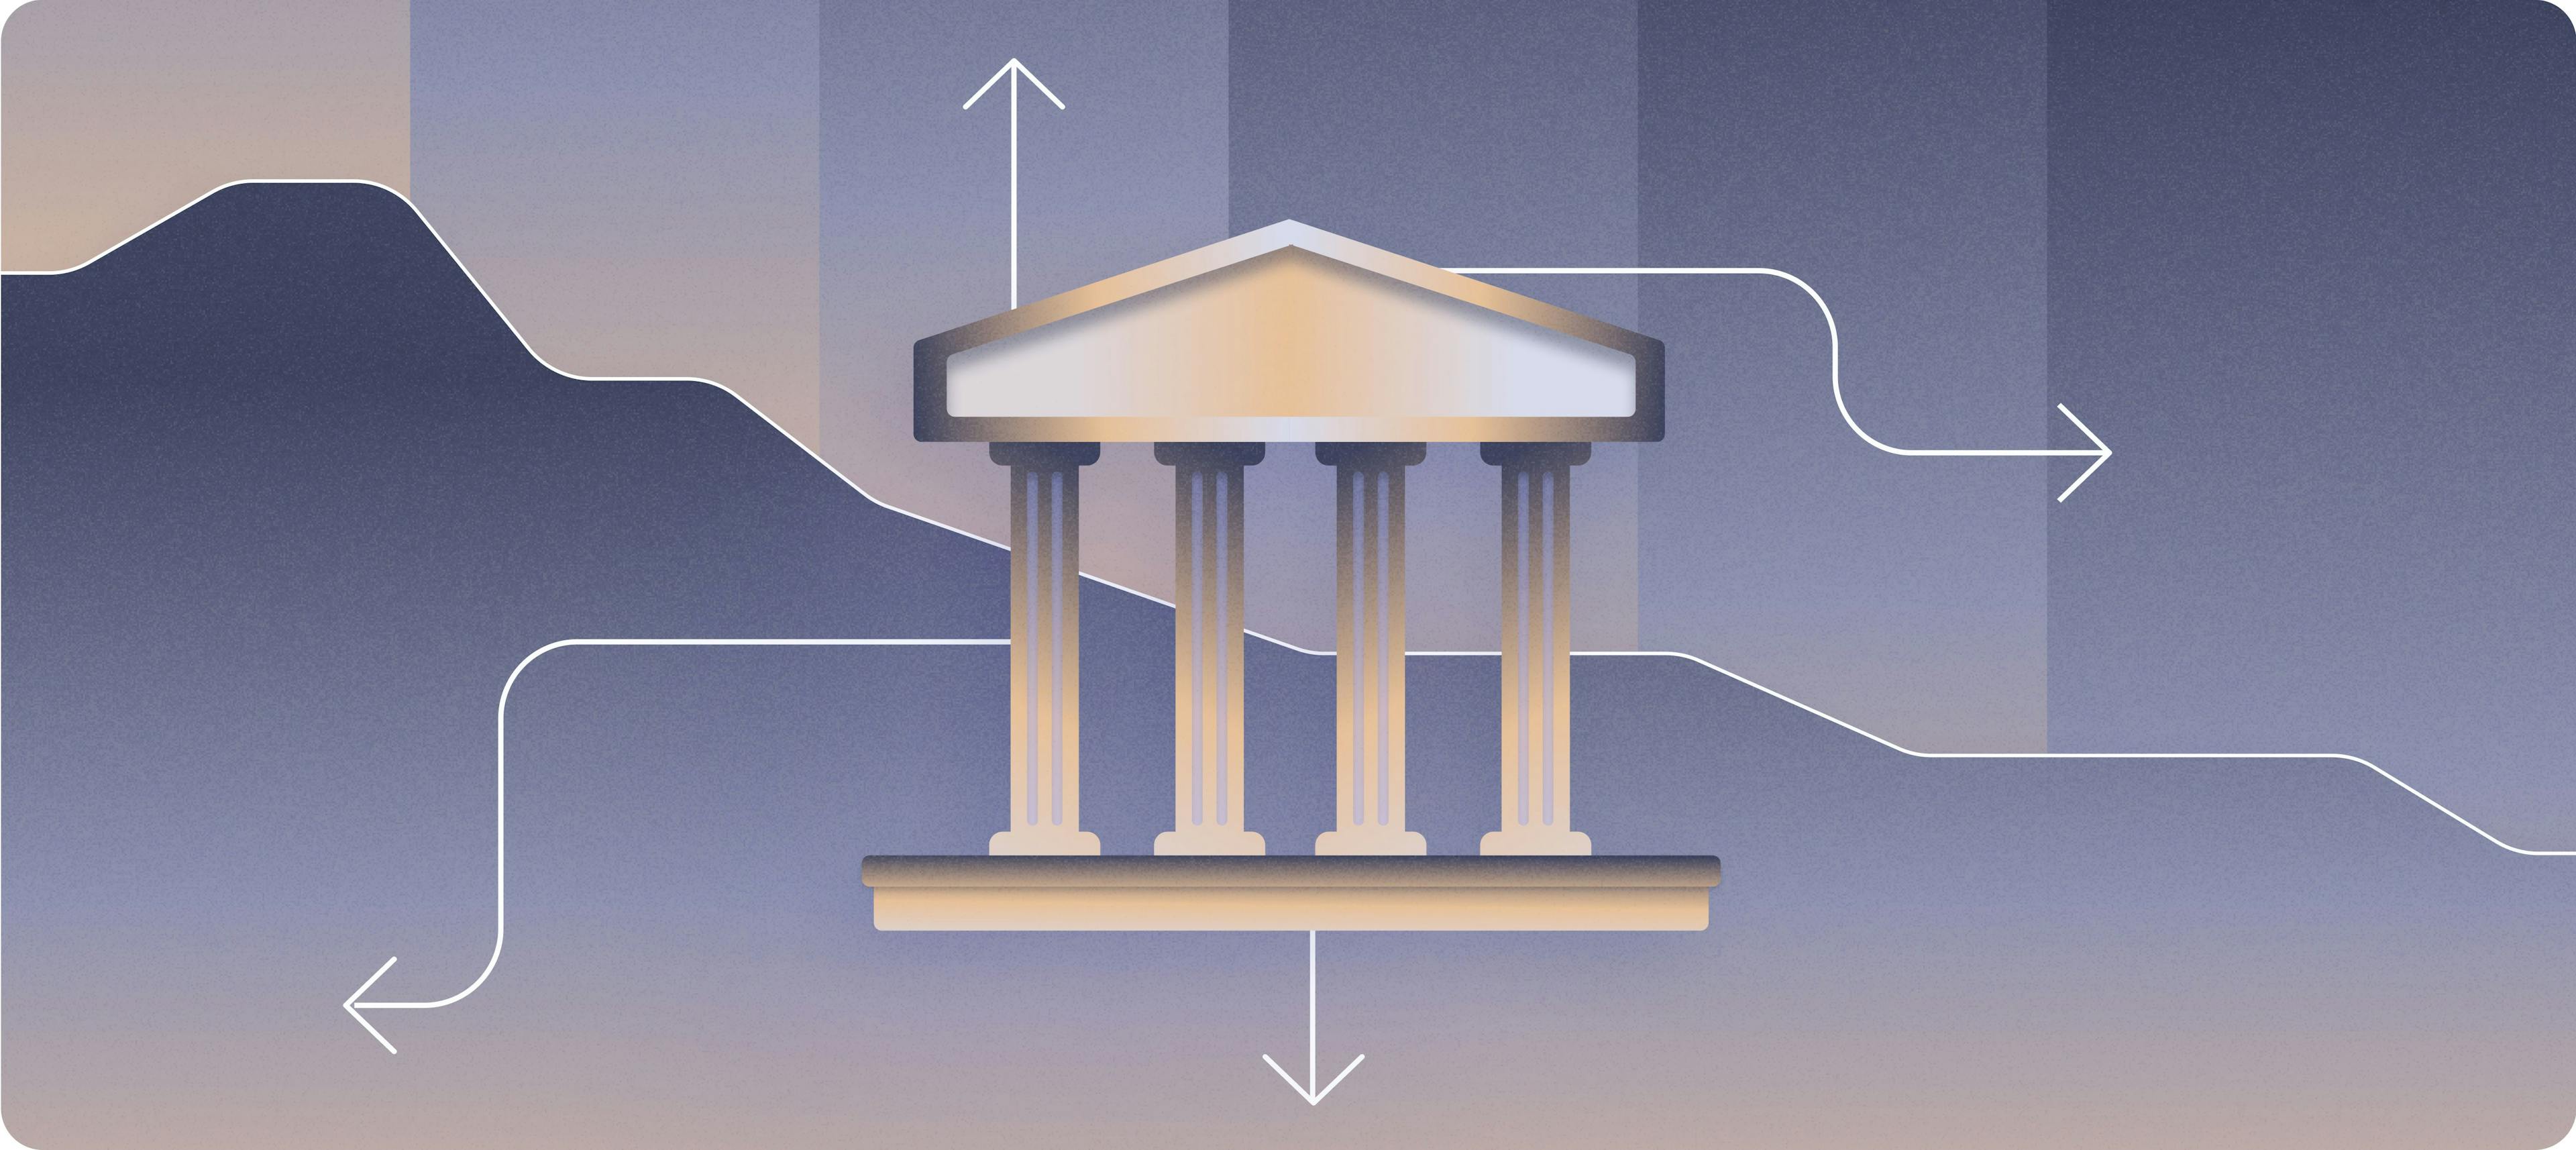 Illustration of how banks operate | Mercury